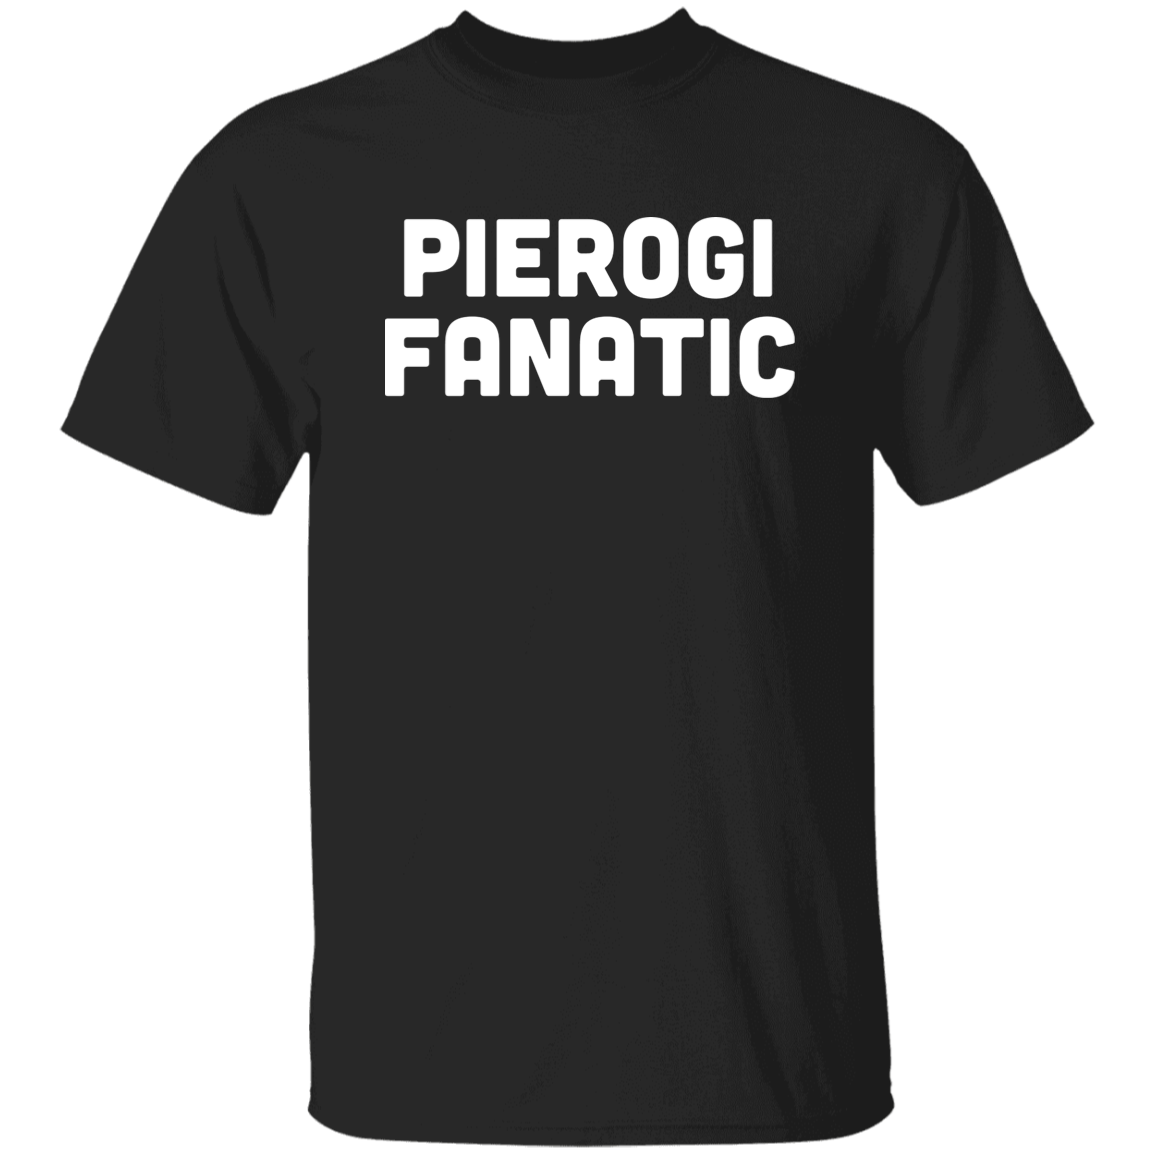 Pierogi Fanatic Apparel CustomCat G500 5.3 oz. T-Shirt Black S